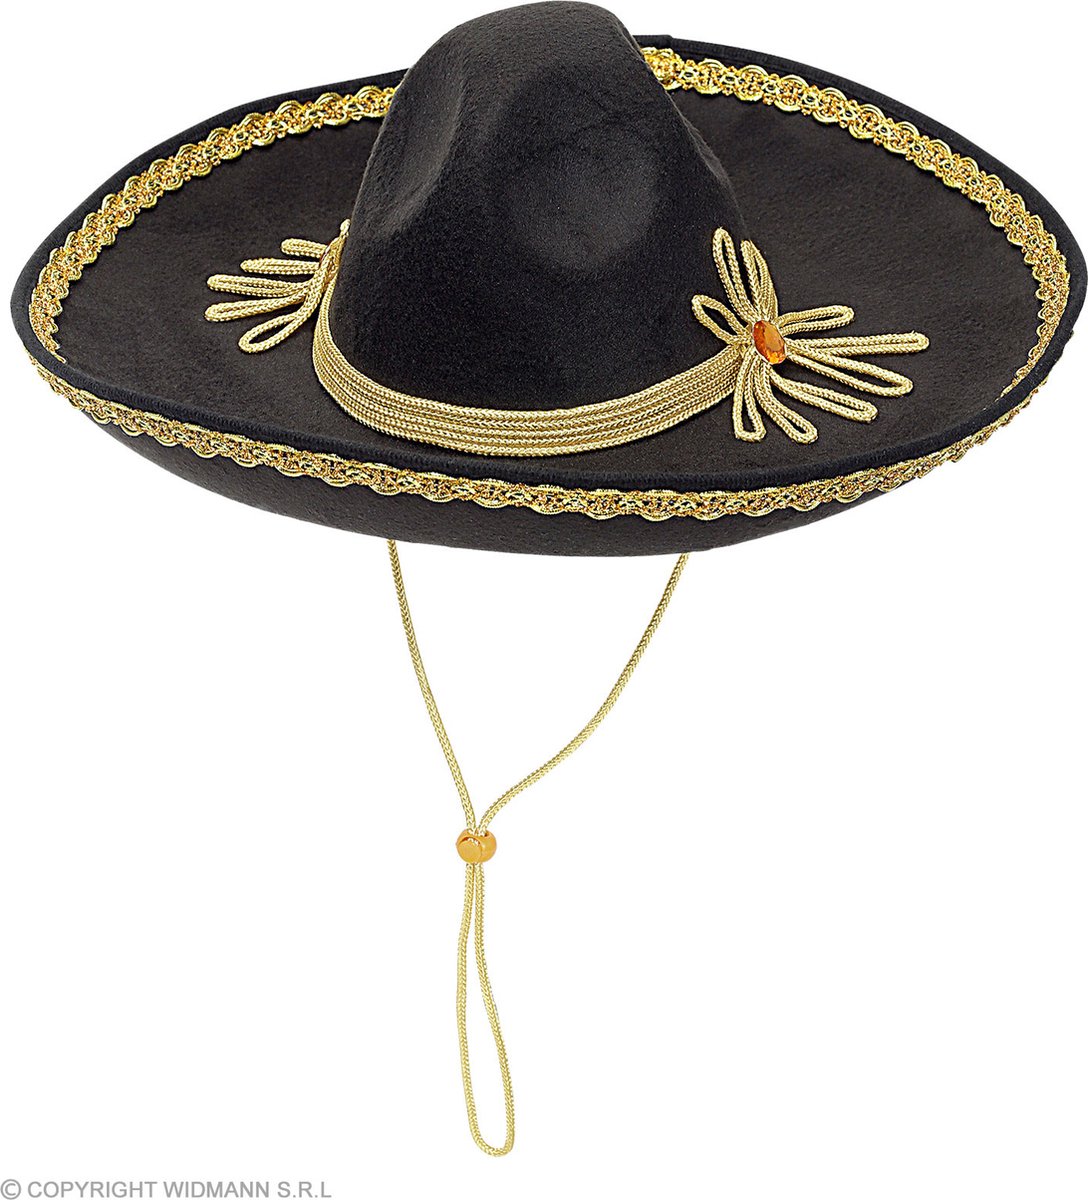 Widmann - Spaans & Mexicaans Kostuum - Manuel Mariachi Sombrero 50 Centimeter - Zwart, Goud - Carnavalskleding - Verkleedkleding